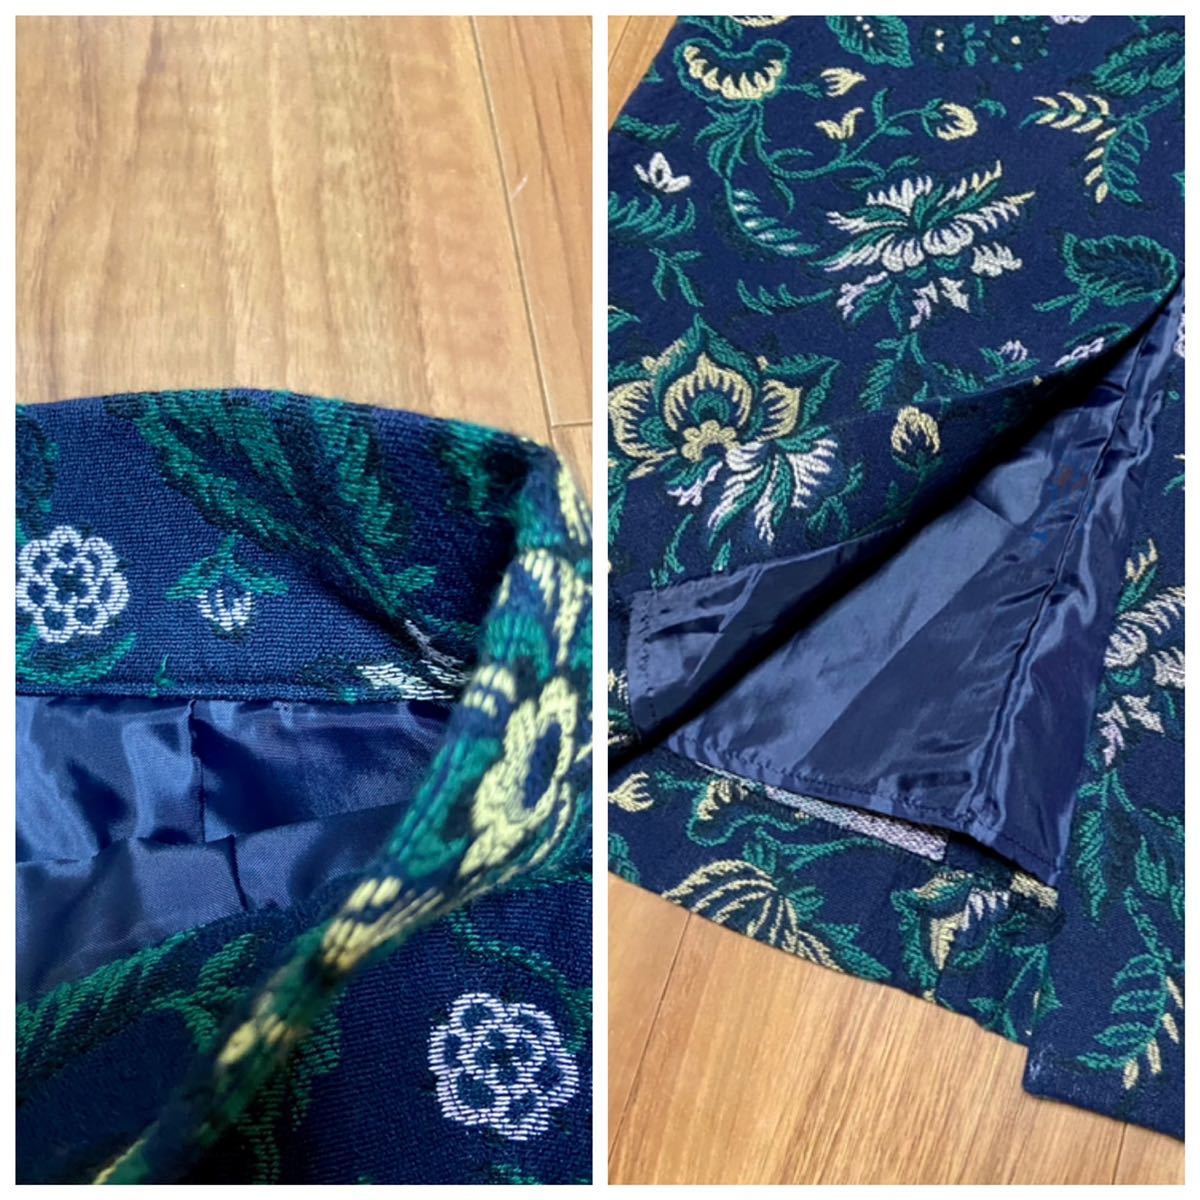  beautiful goods SLOBE IENAbotanikaru flower Jaguar do skirt regular price 15400 jpy 36